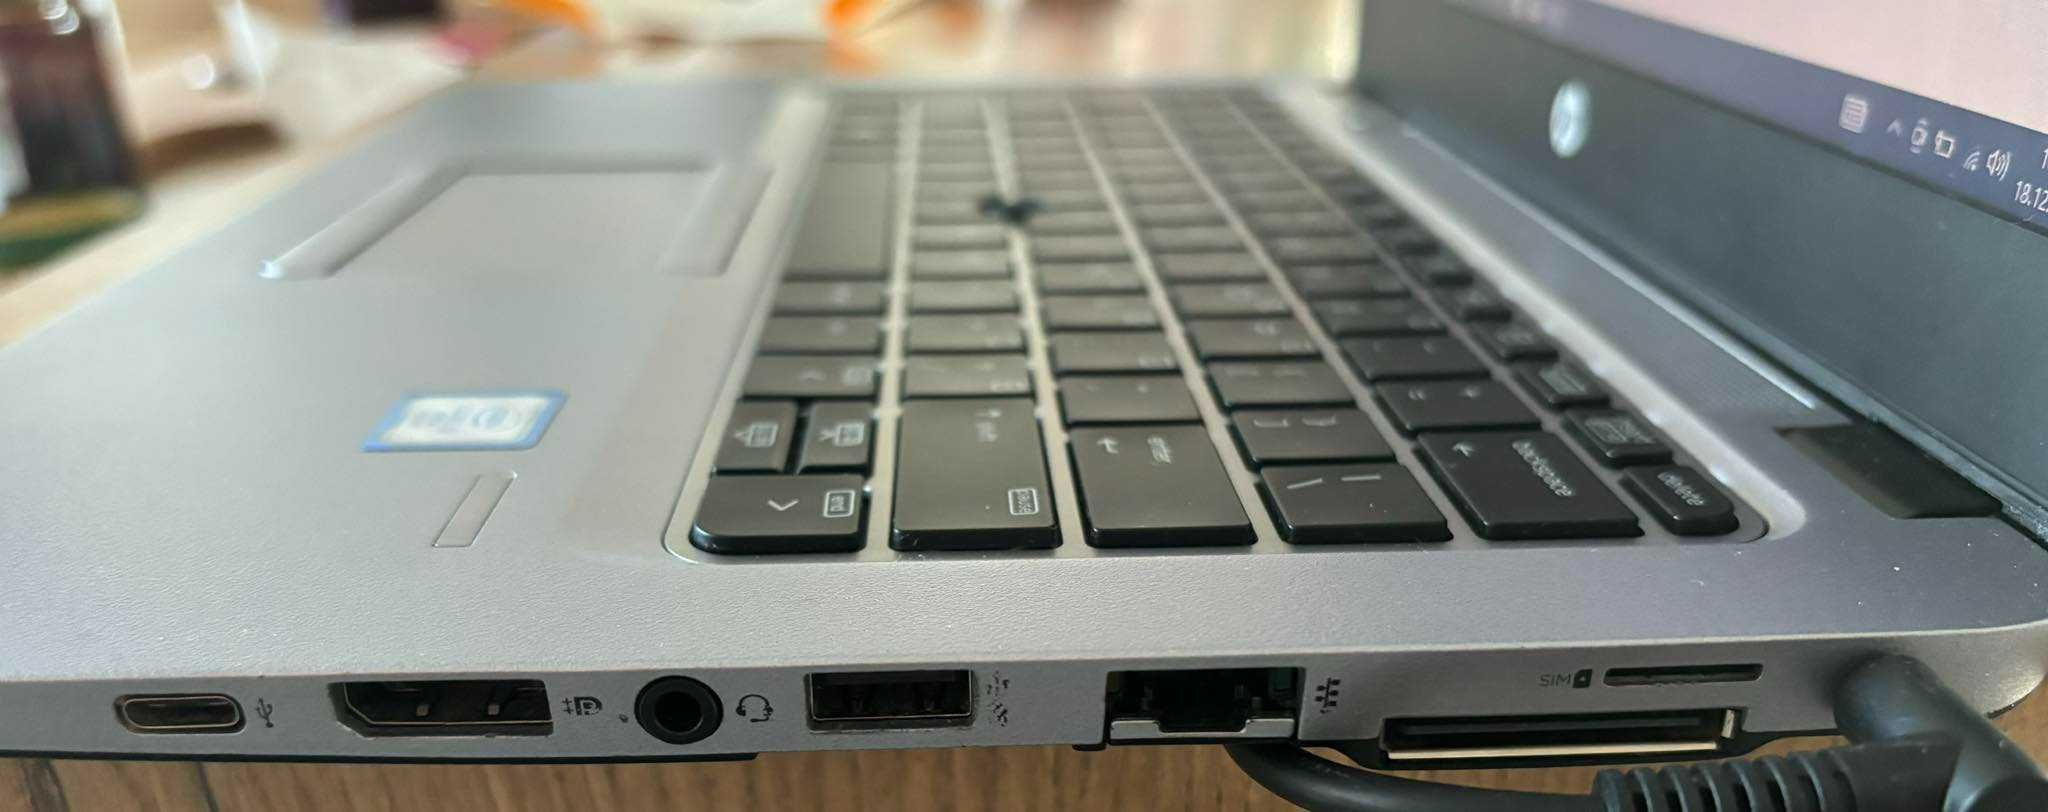 Laptop HP EliteBook 820 G3 Intel i5 8GB WIN-10 64bit Dysk 160GB